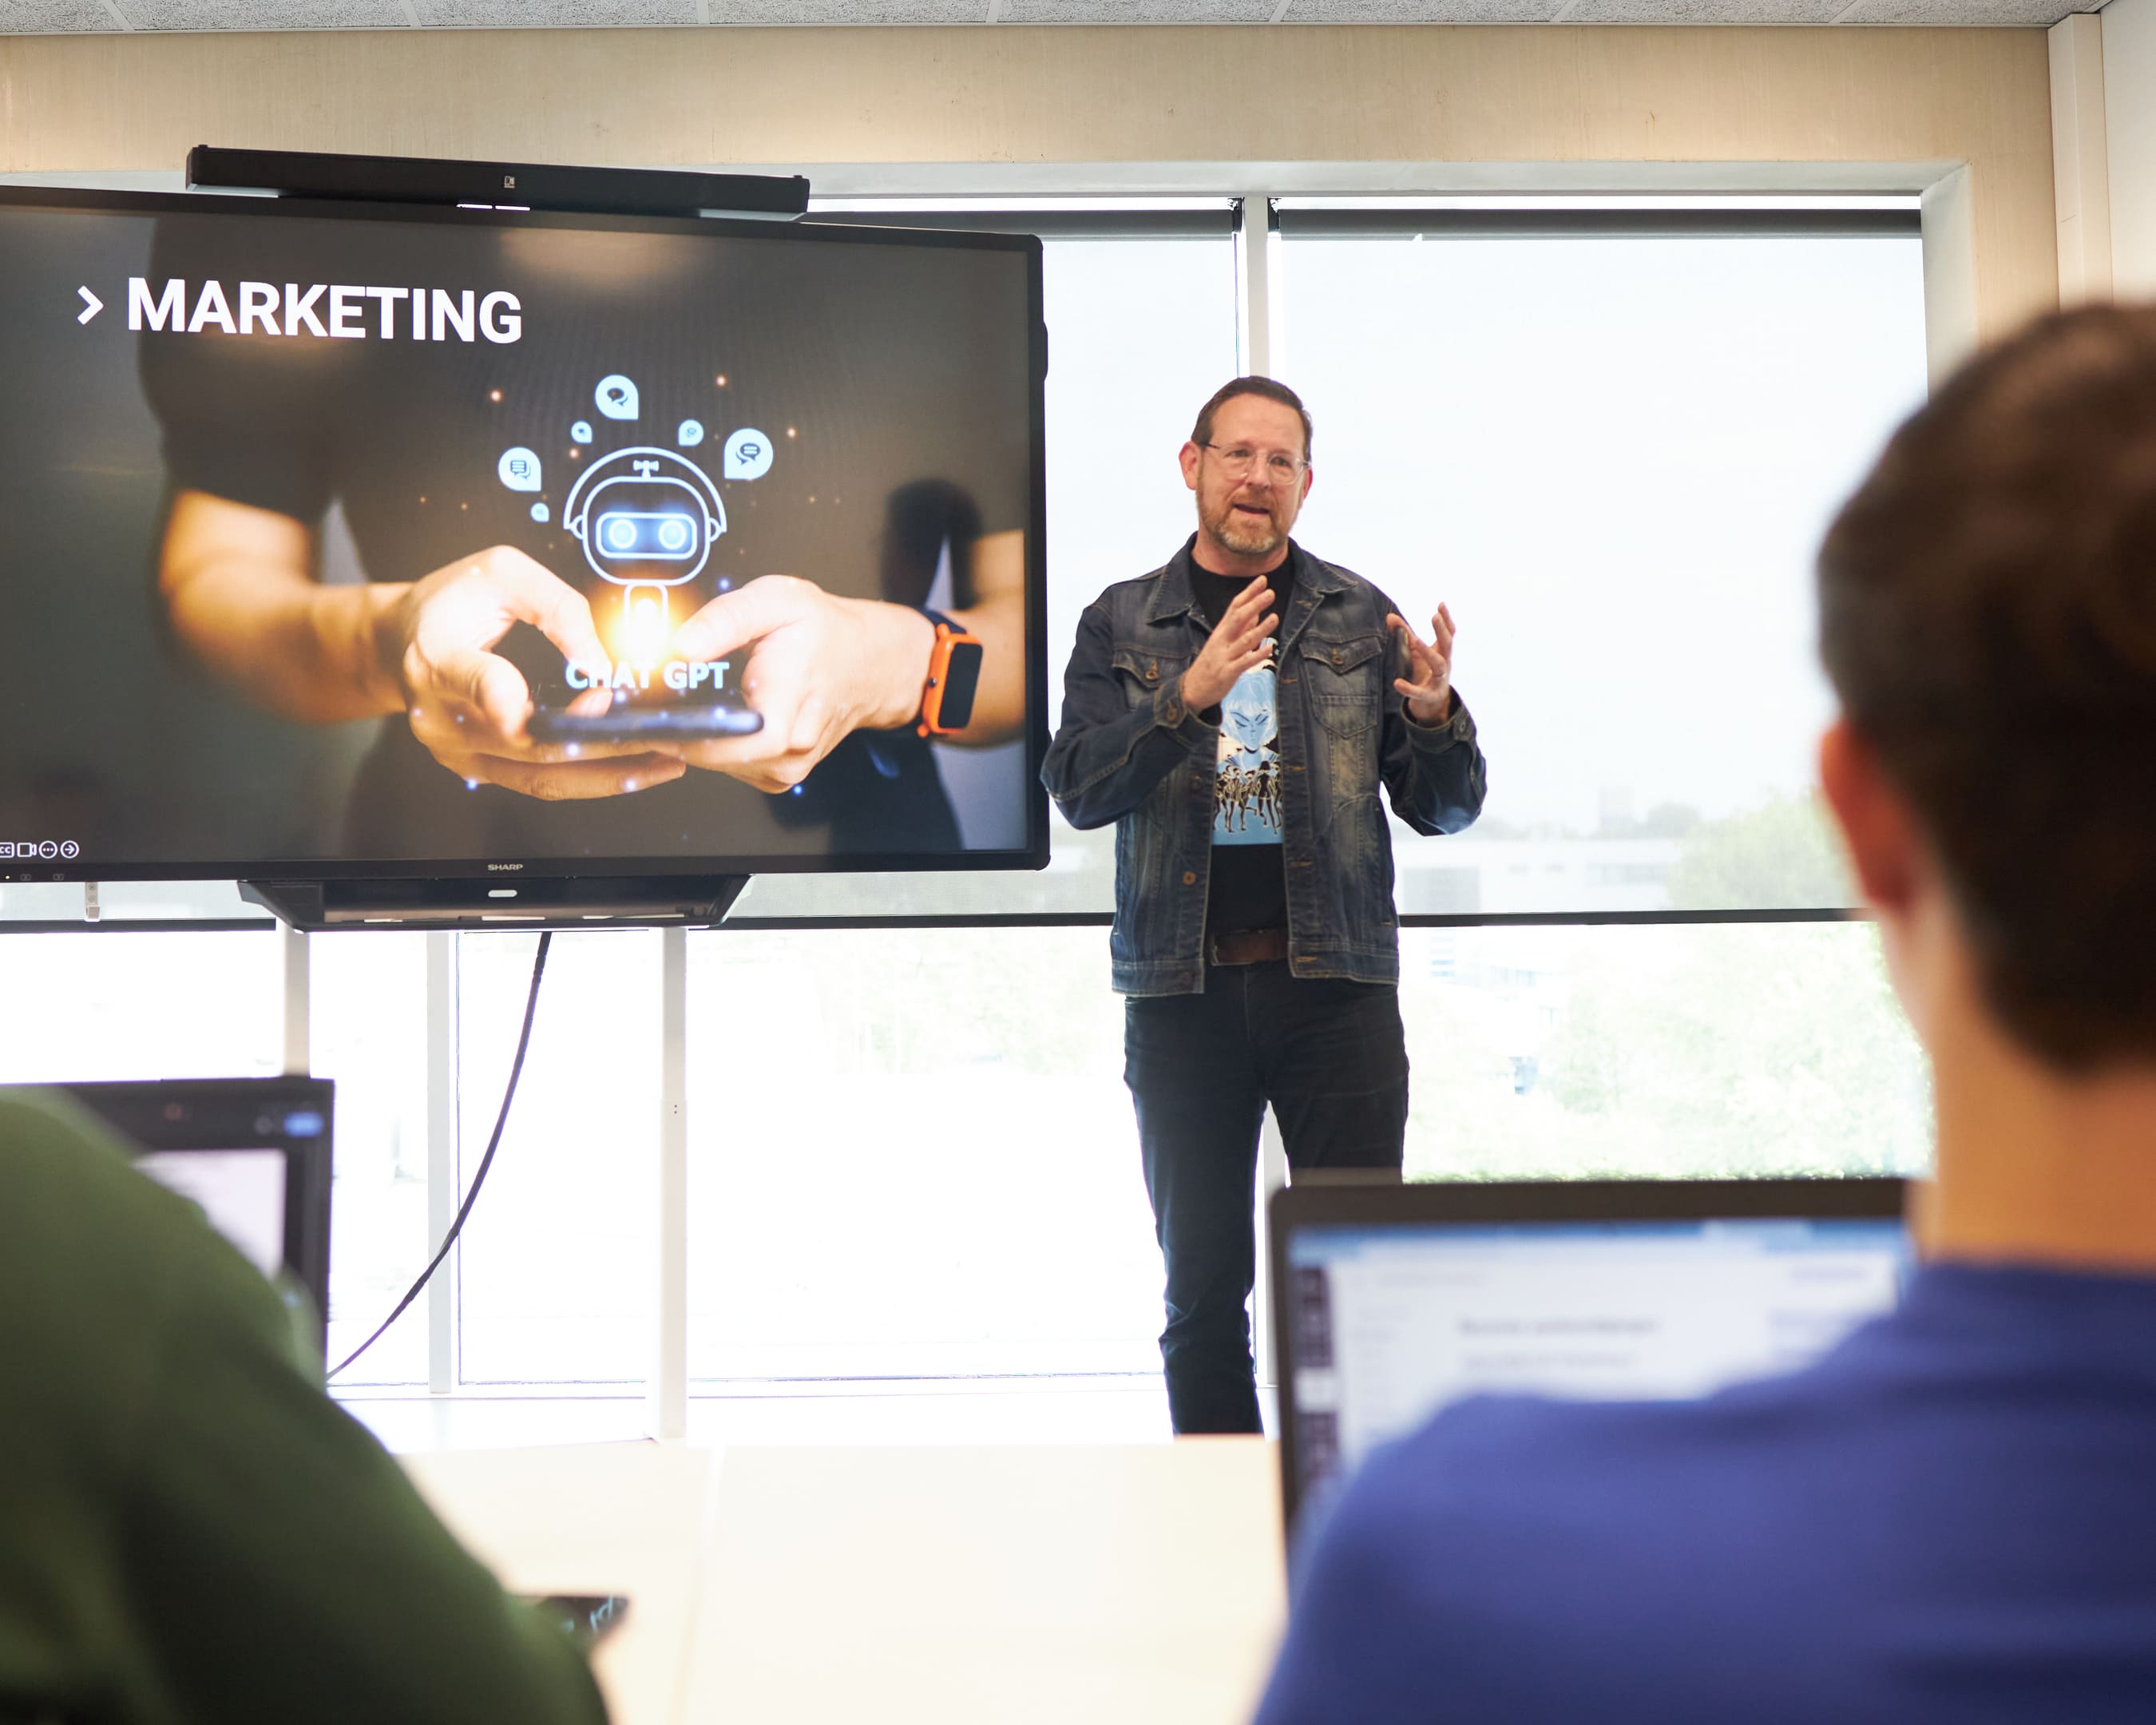 Marketing Management - Digital Business Concepts building 